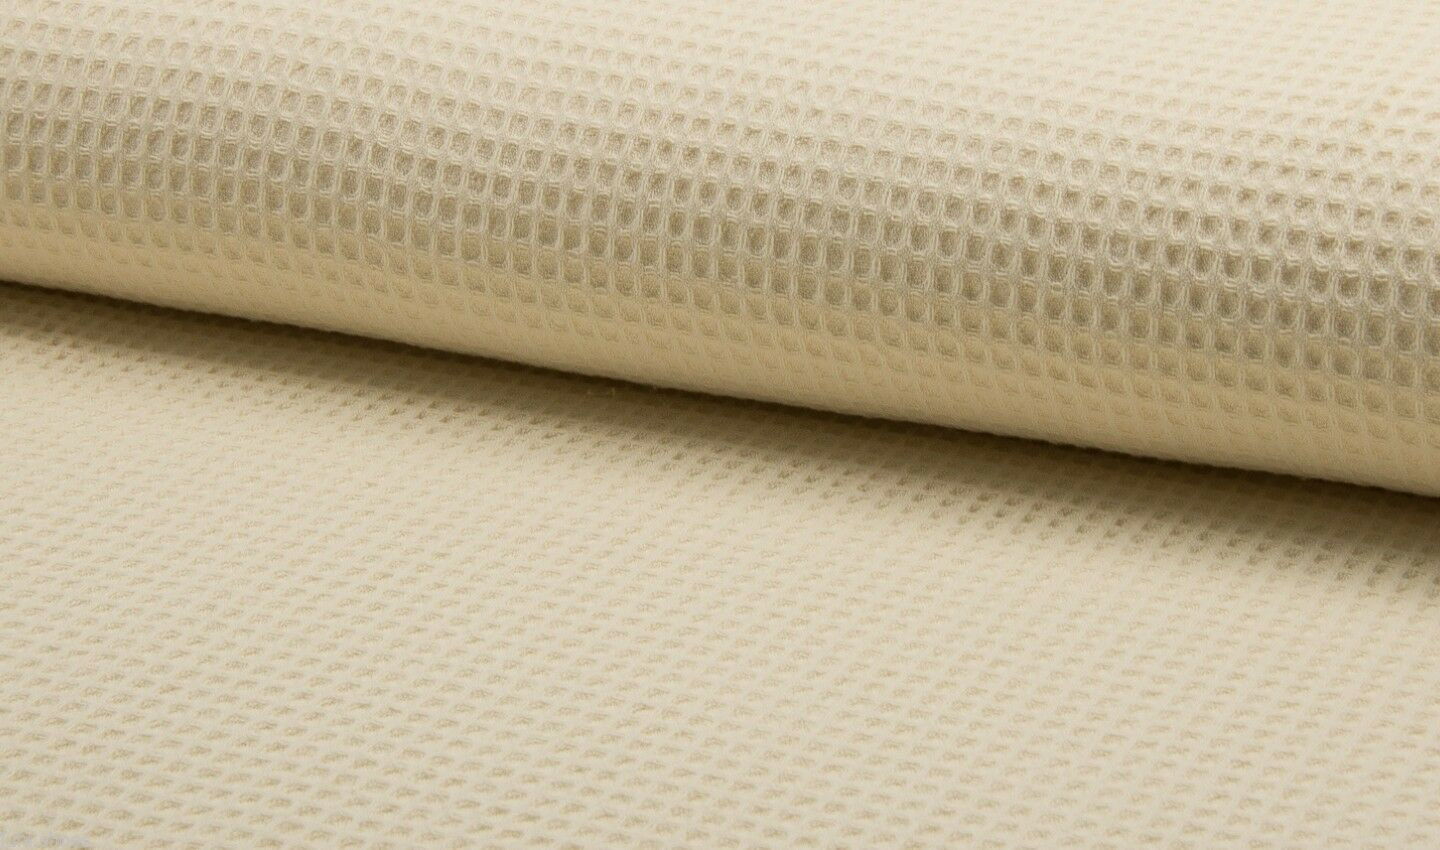 Cotton WAFFLE Pique Honeycomb Fabric Material - bathrobe, gown, towel,  cushion - 150cm wide - SILVER GREY - Lush Fabric